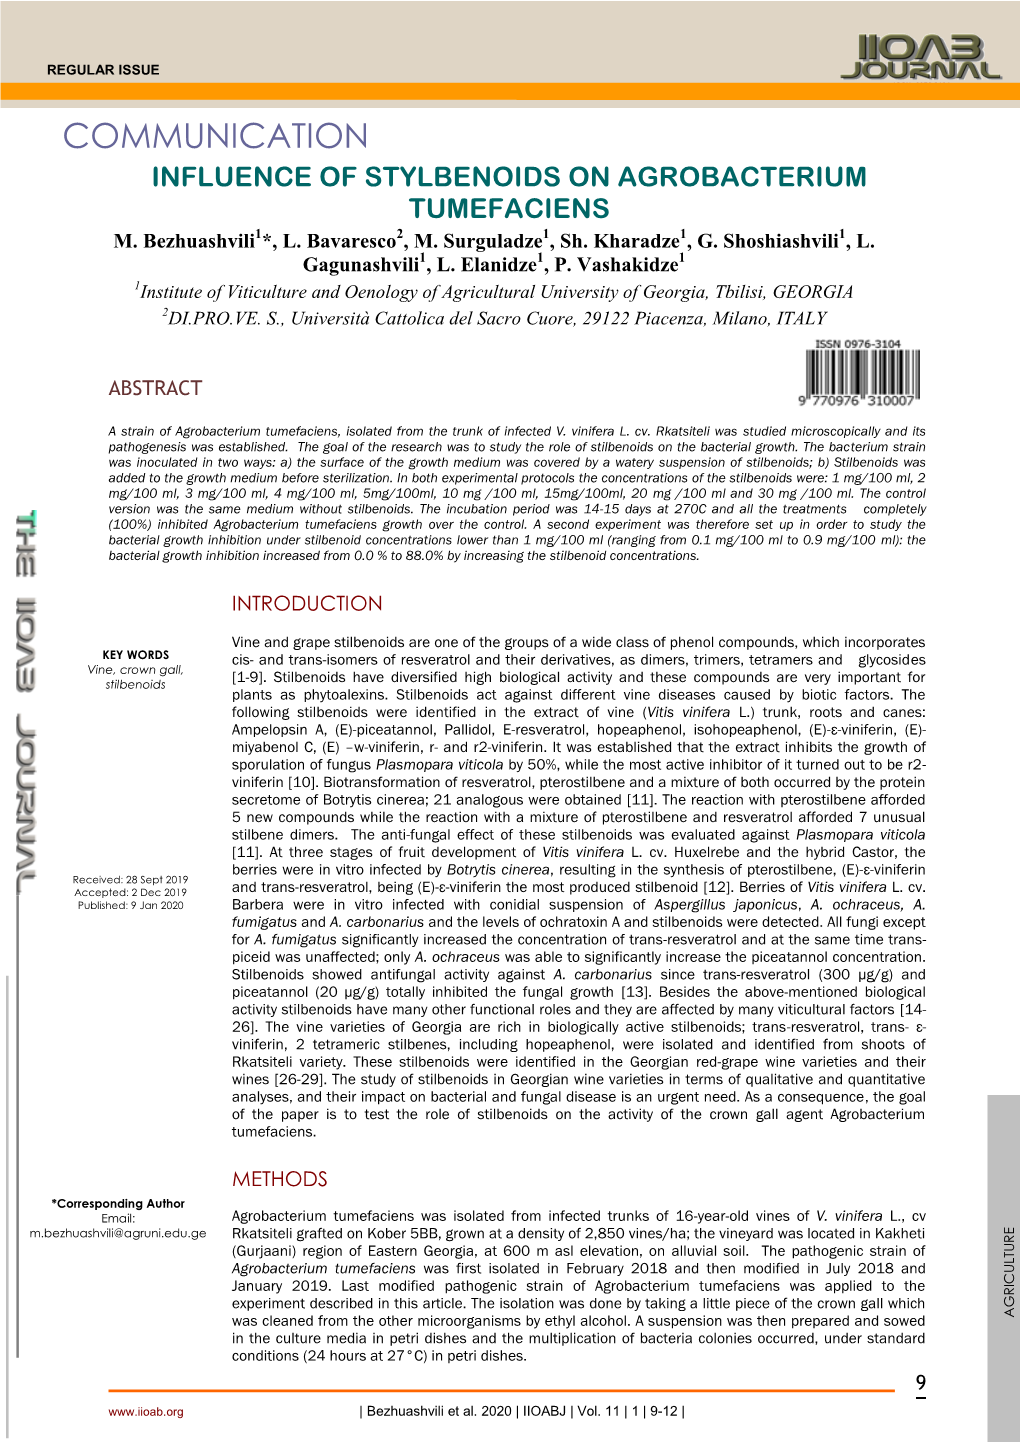 Communication Influence of Stylbenoids on Agrobacterium Tumefaciens M